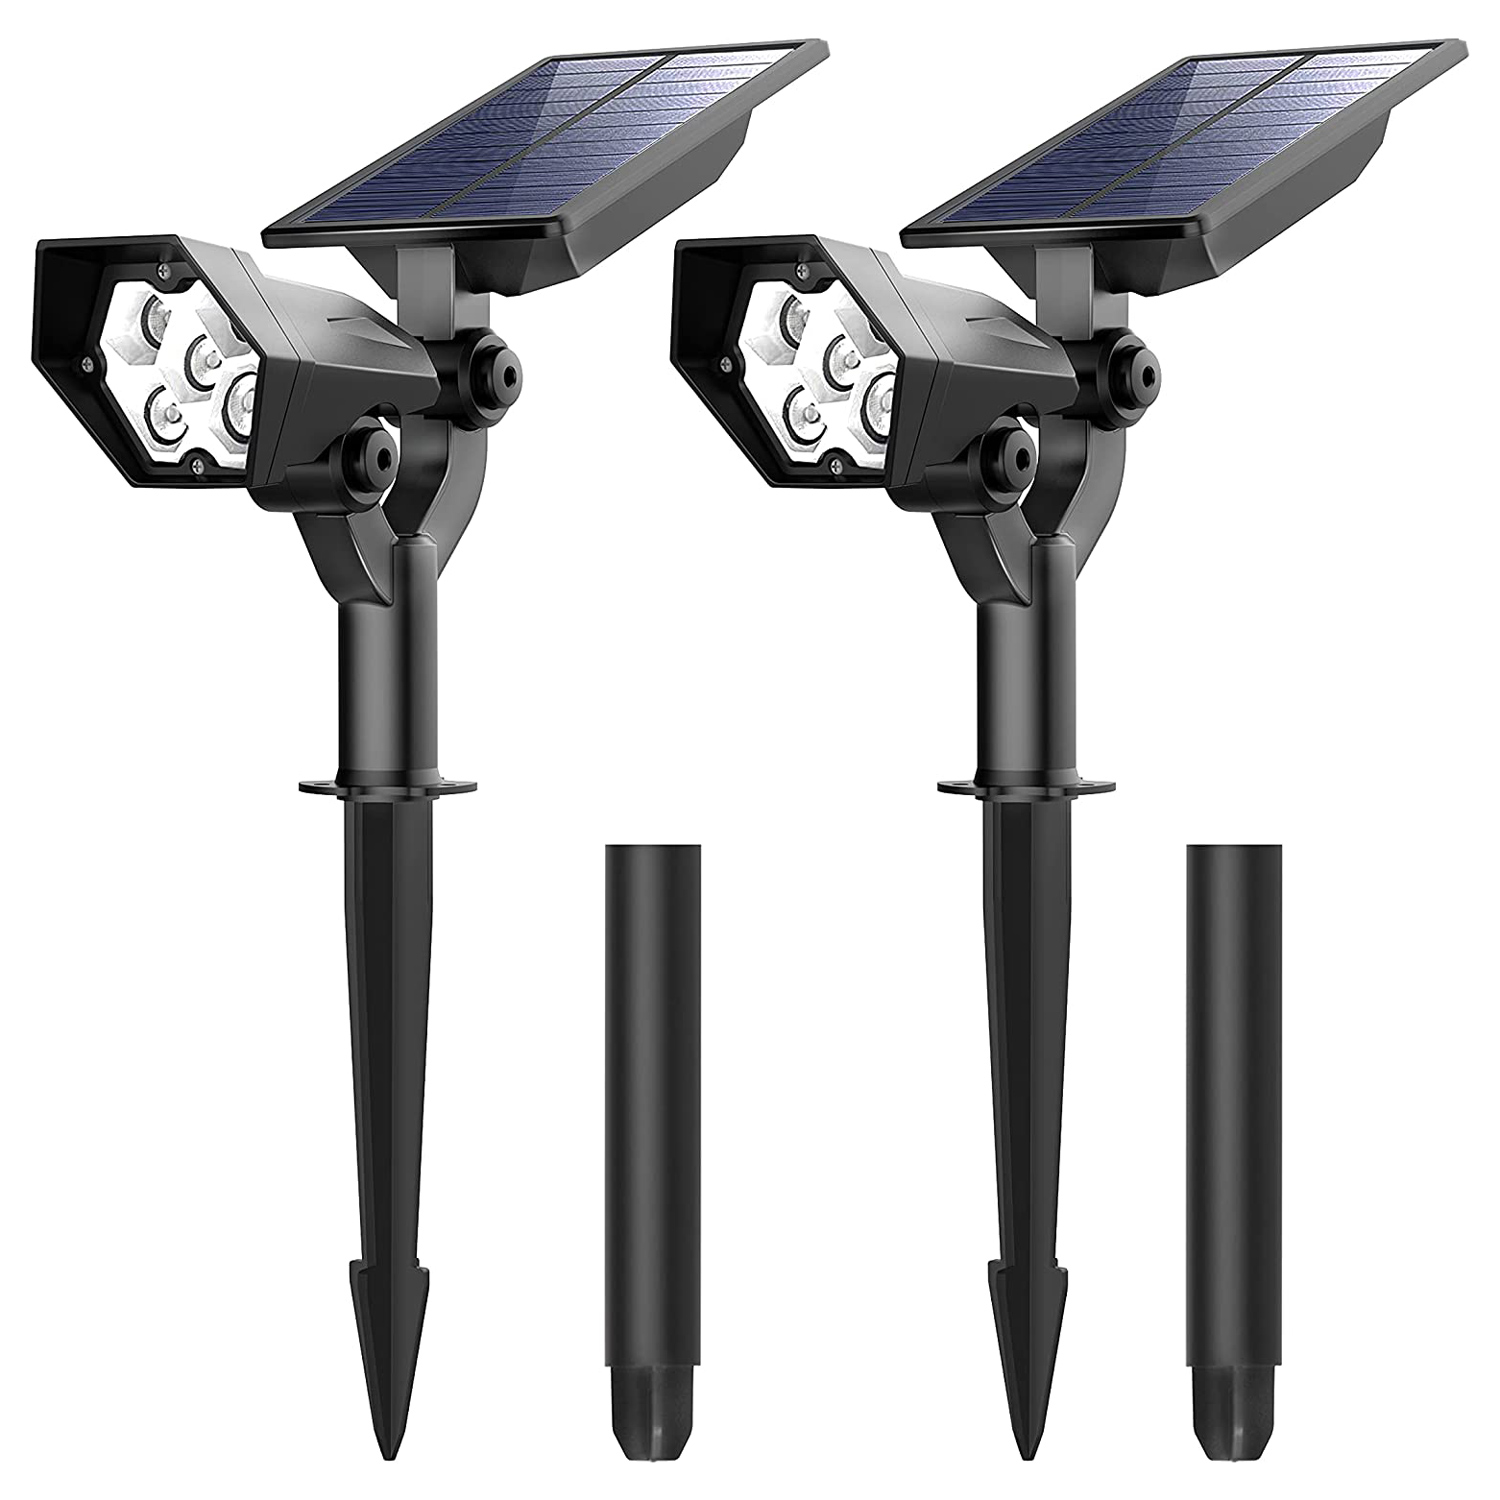 5 LED Garden Lawn Lights Solar Power IP 65 Waterproof Walkway Lighting